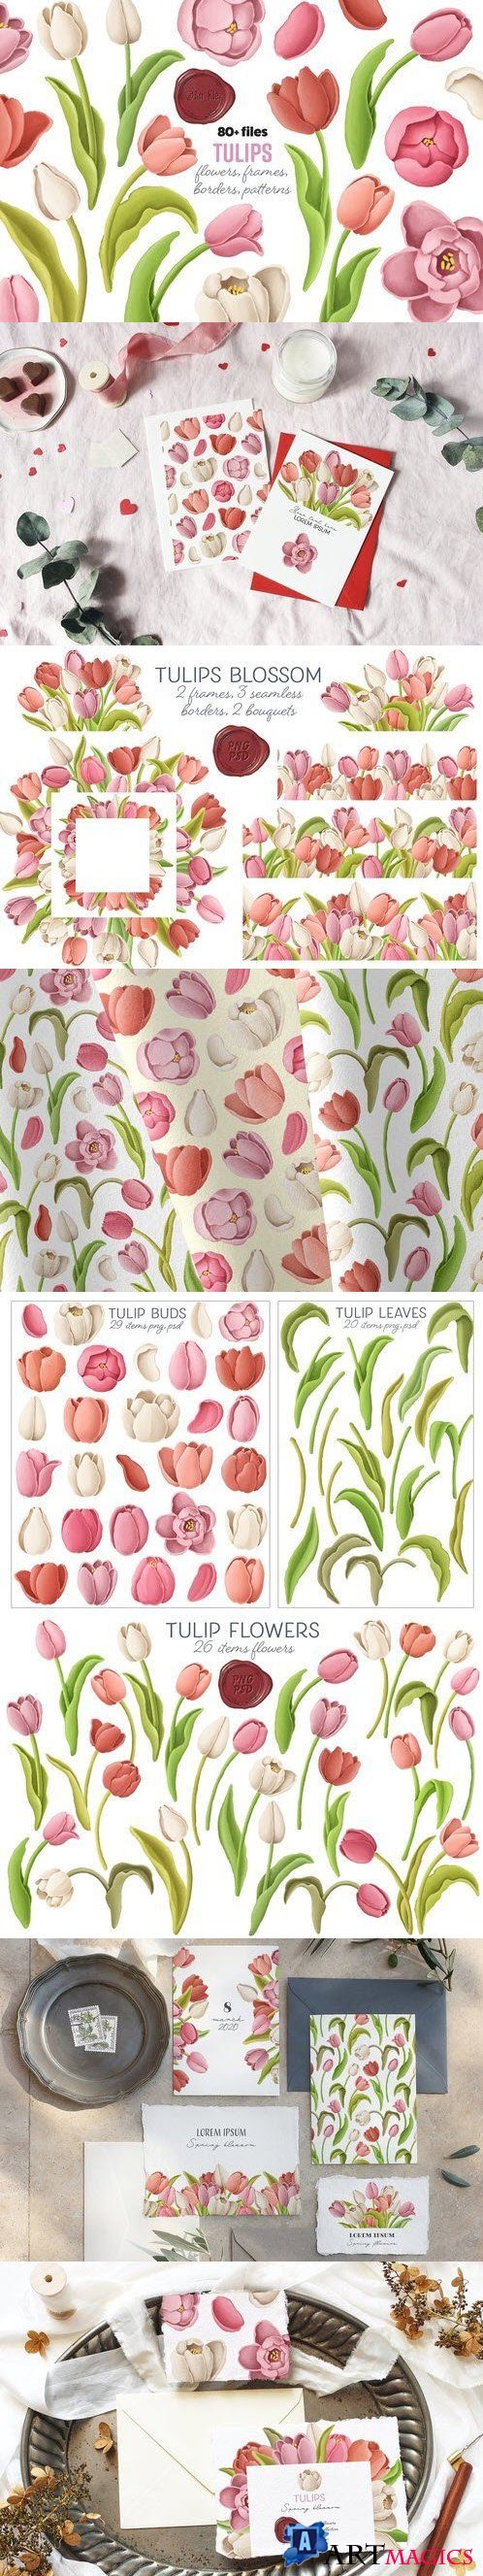 Tulips flowers, patterns, borders - 4440871